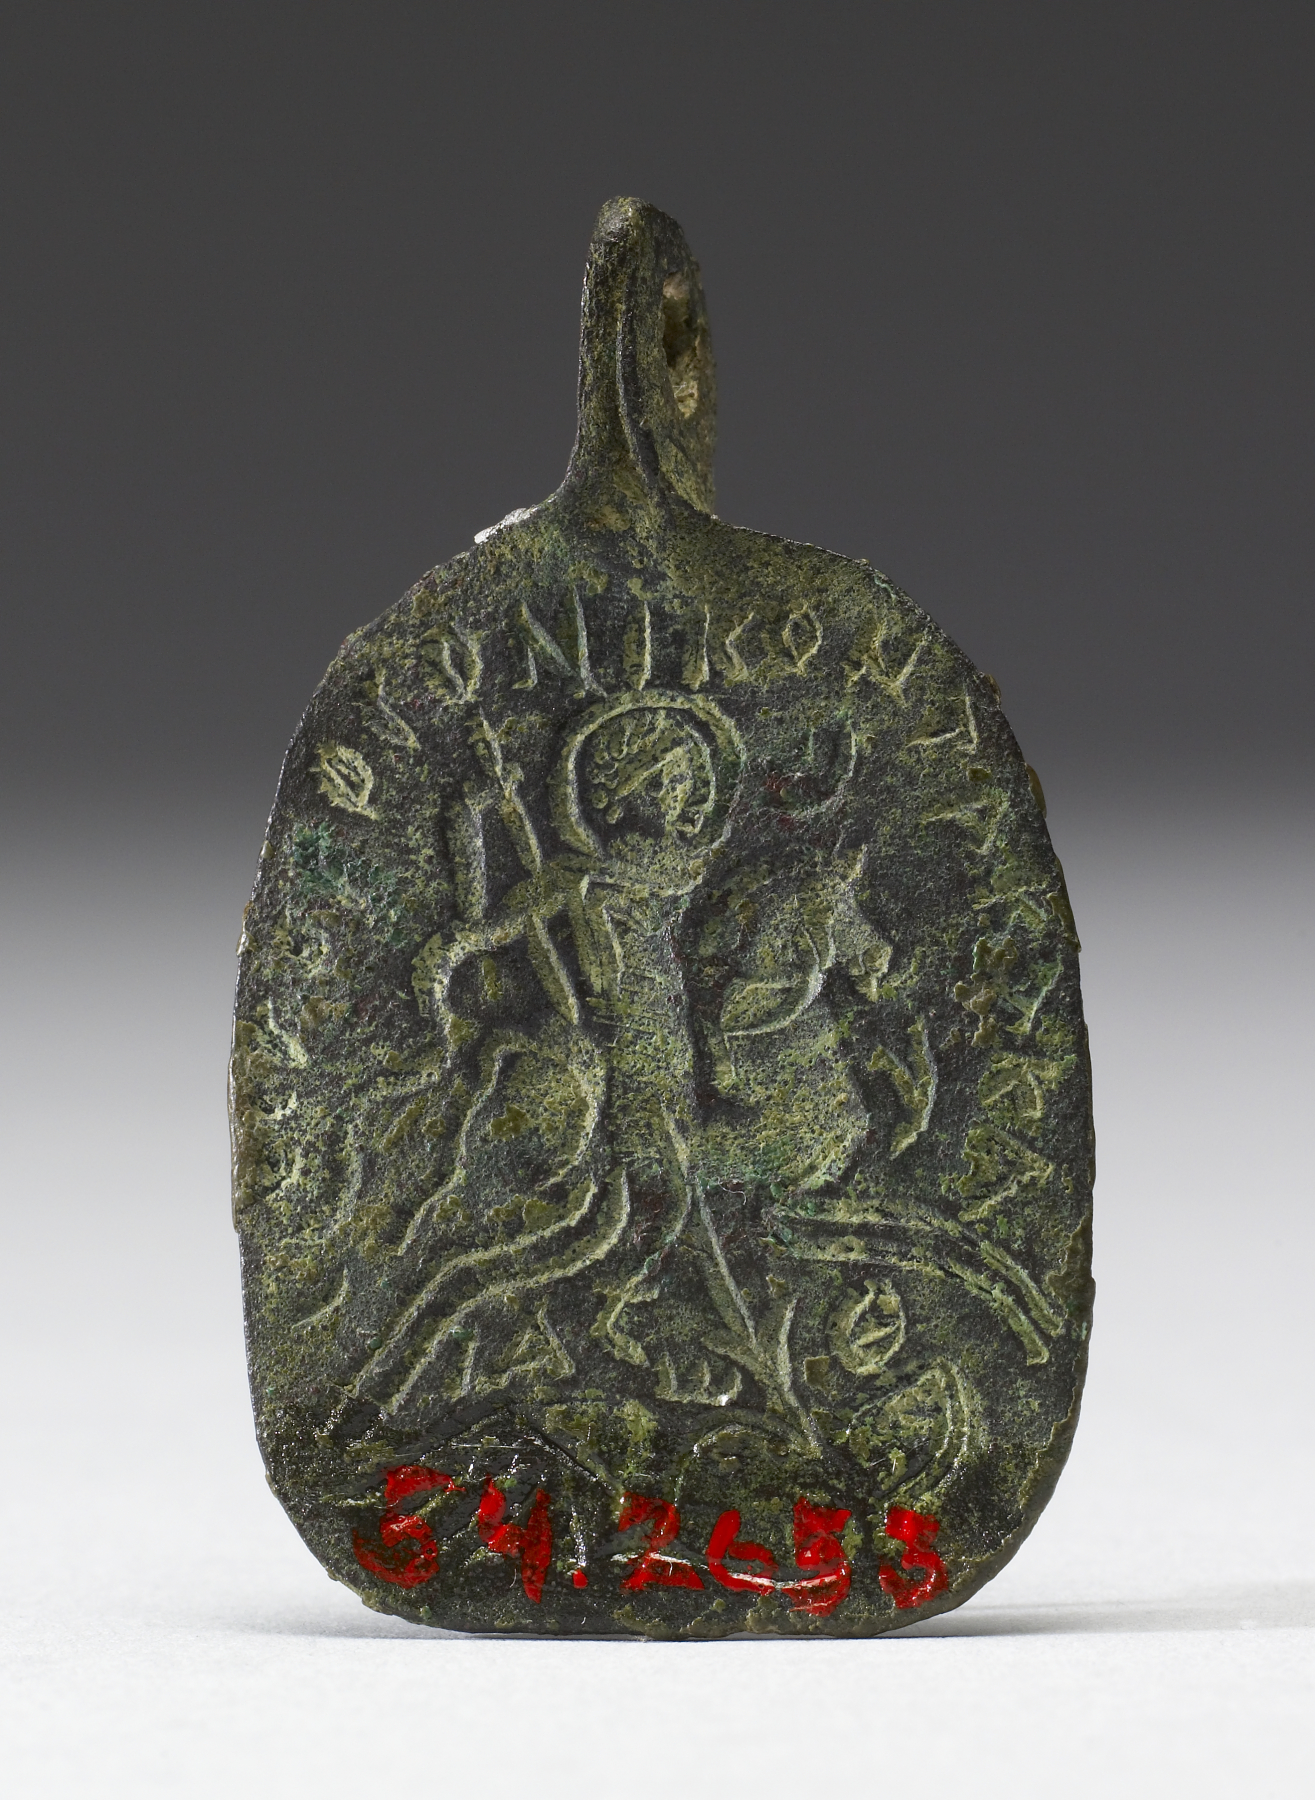 Image for Amuletic Pendant